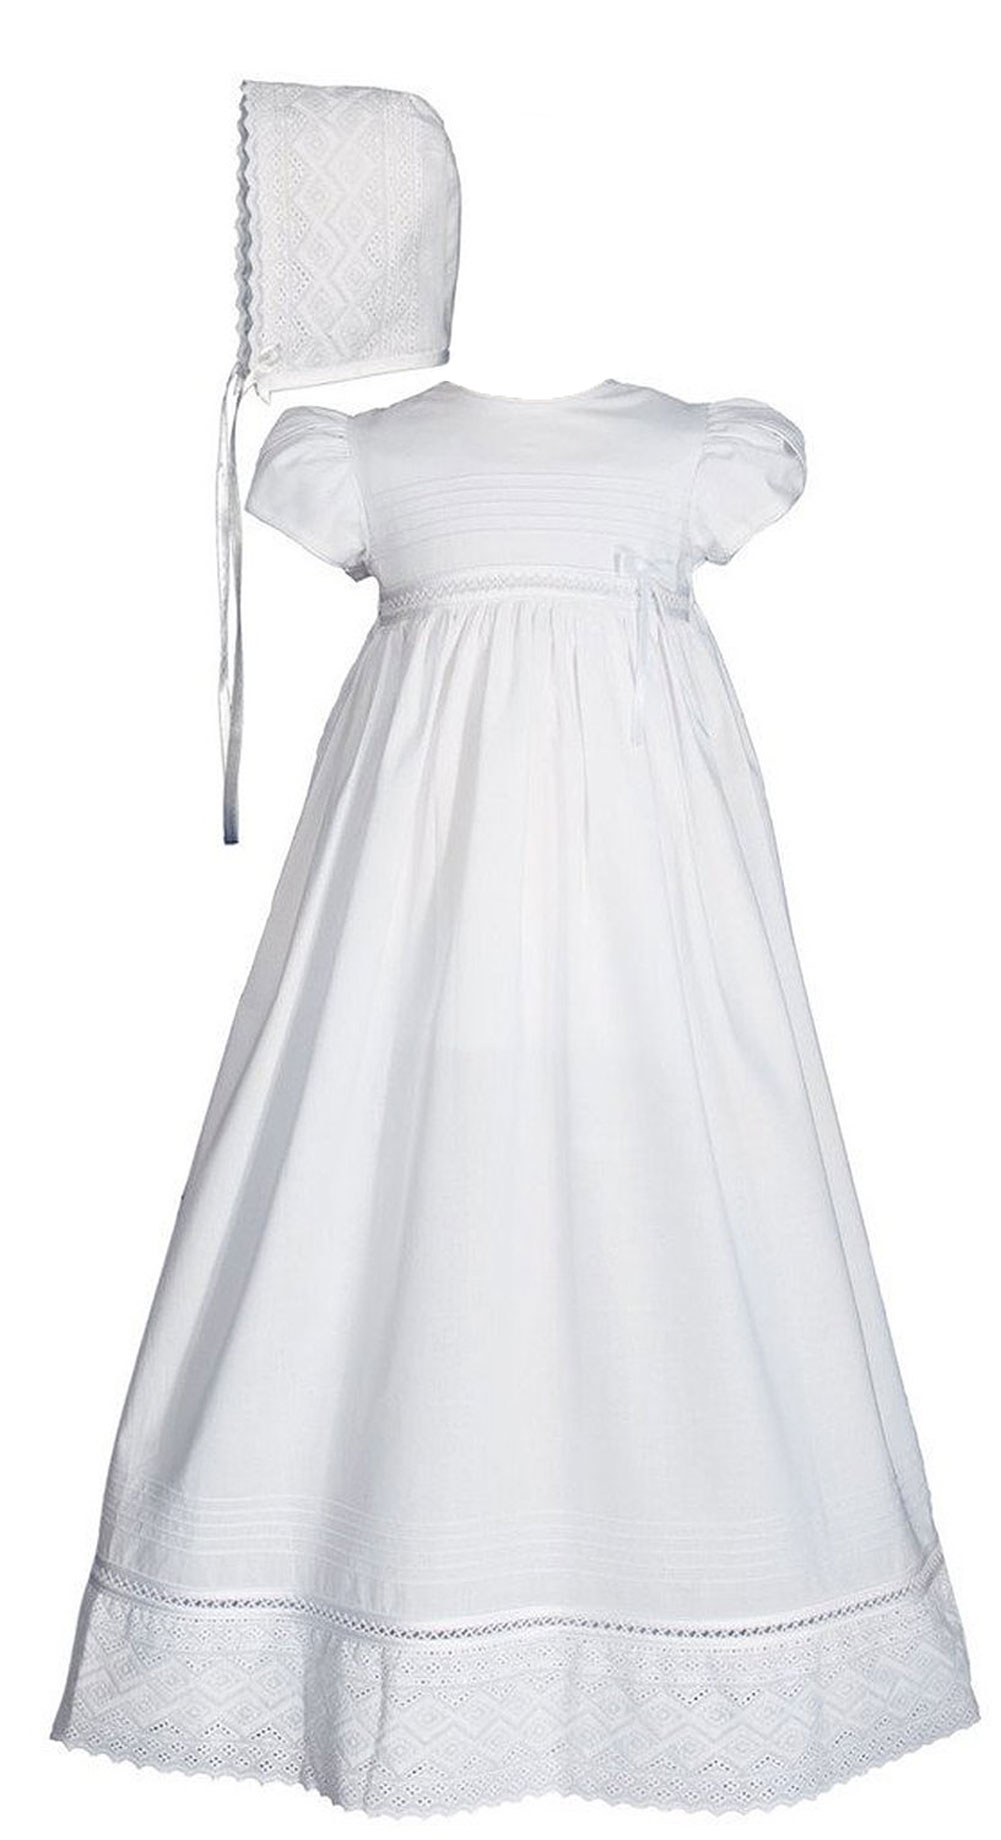 white christening gown